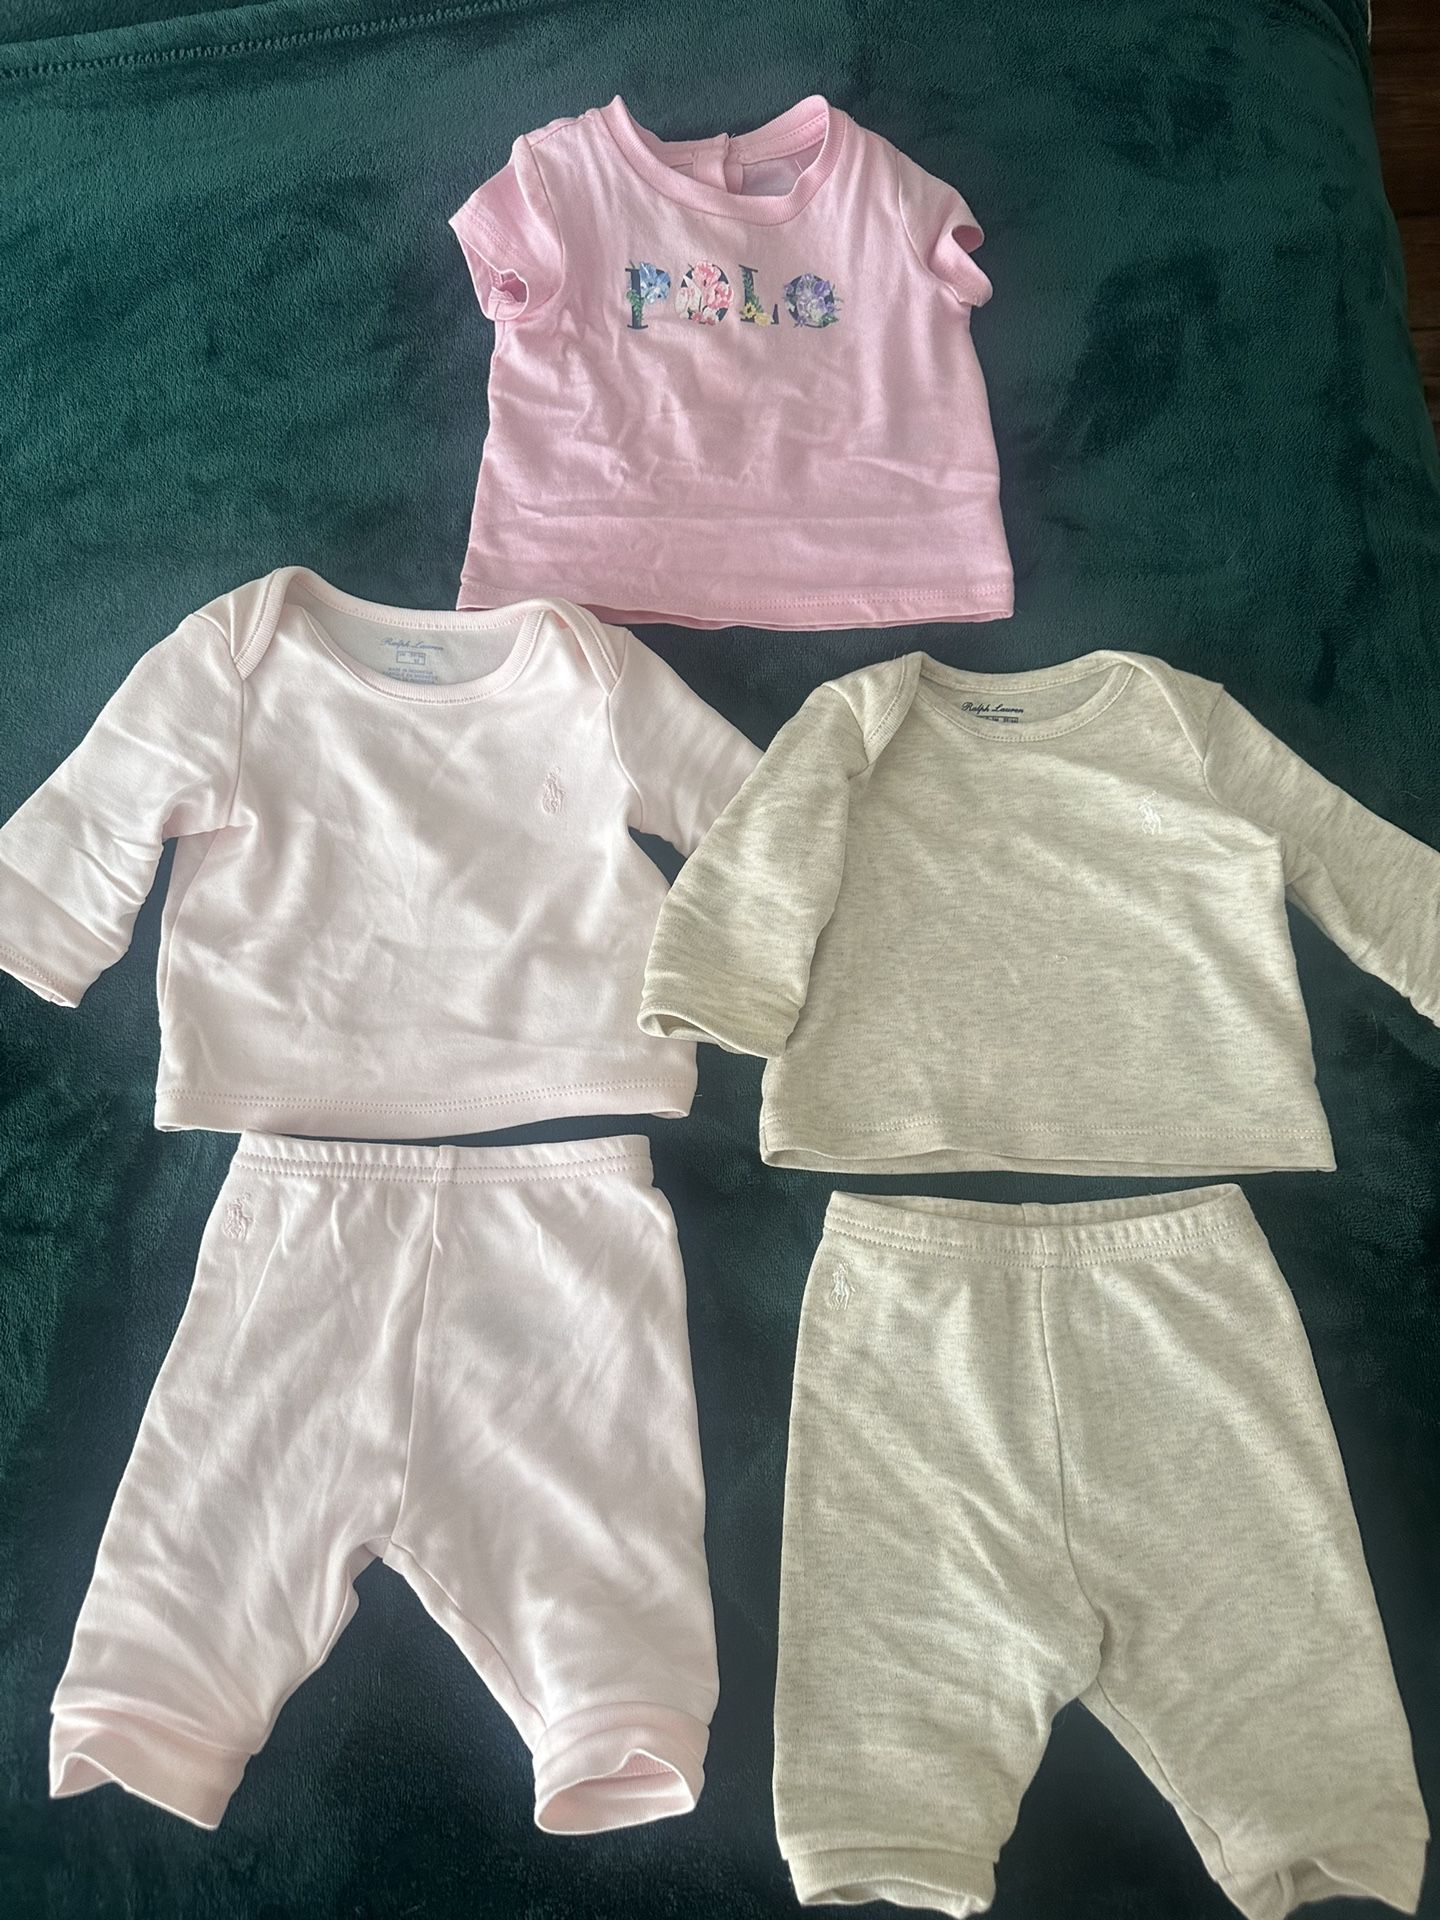 Polo Ralph Lauren Baby clothes 